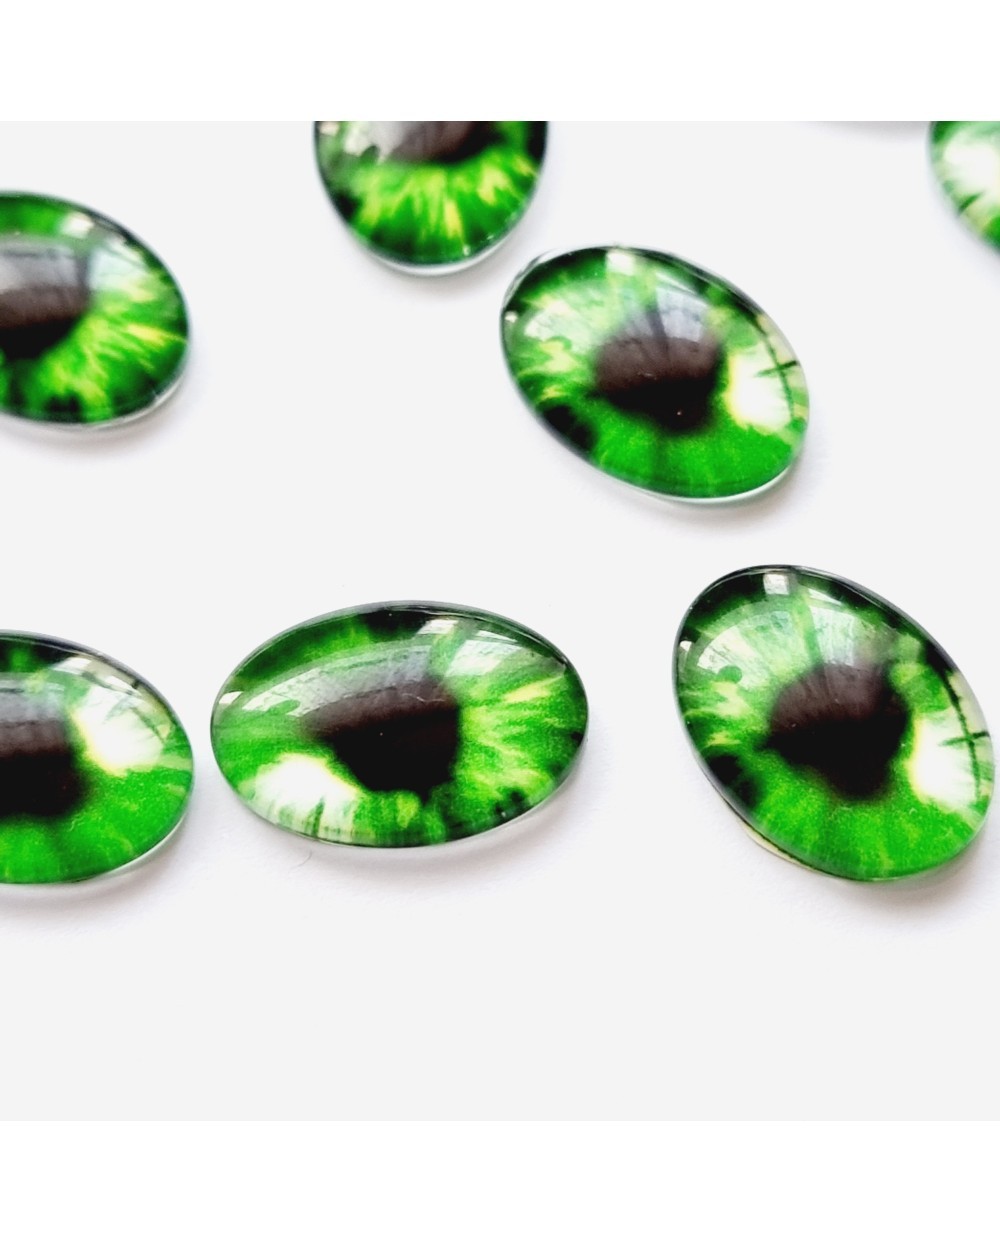 Kabošonas stiklinis žalia akis, 13x18mm, 1 vnt.